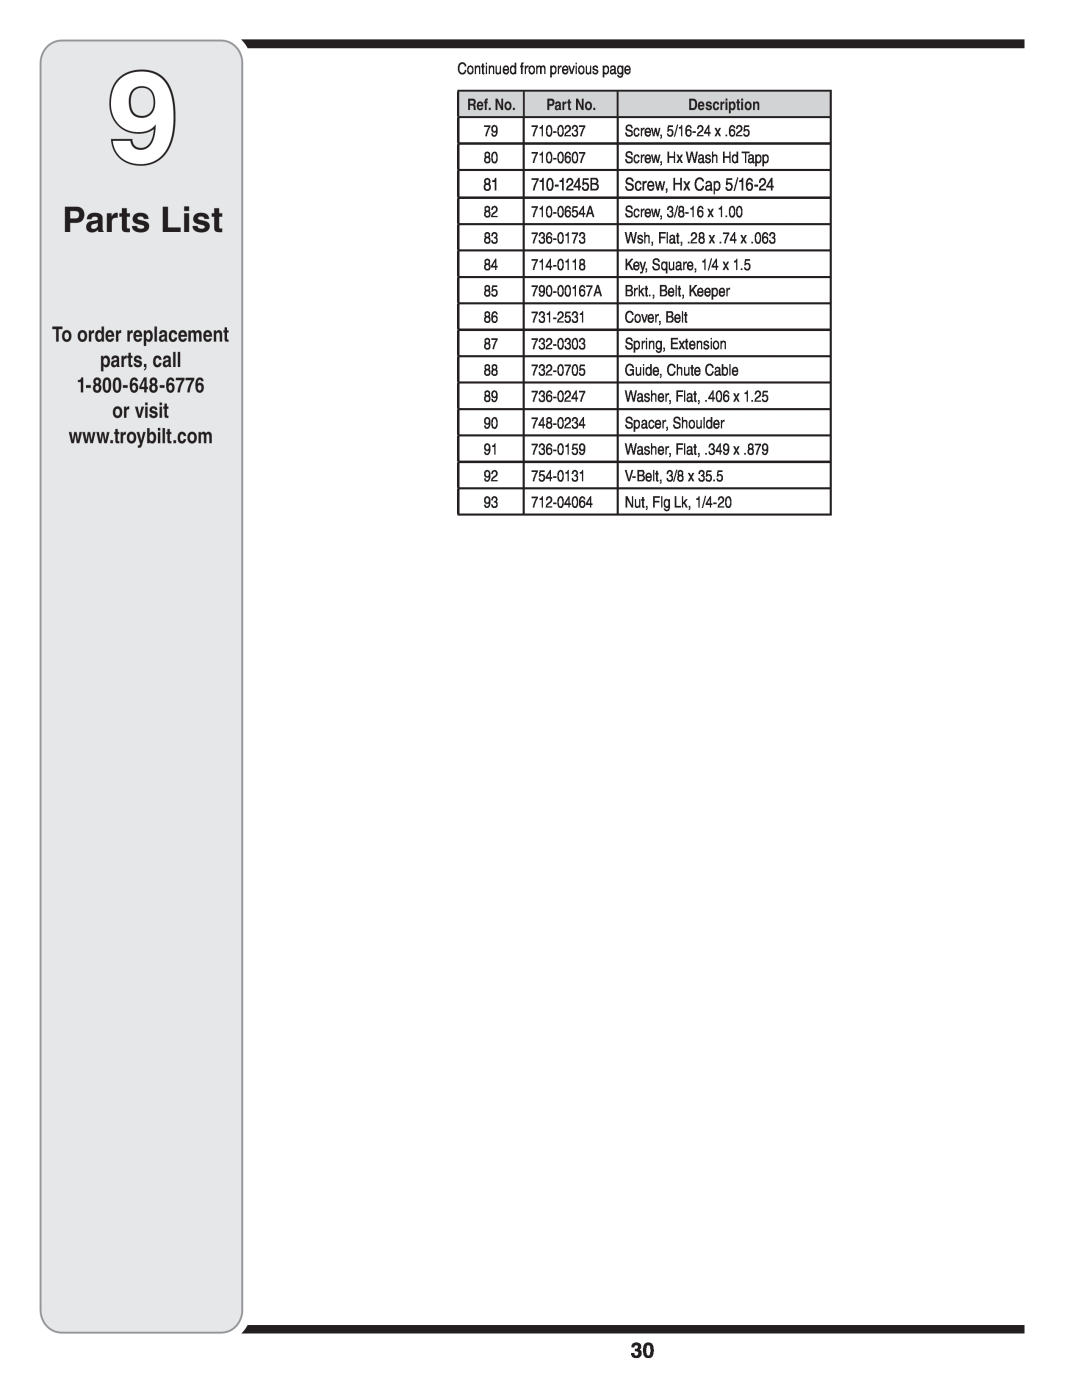 Troy-Bilt 31AH9Q77766 warranty Parts List, 81 710-1245B Screw, Hx Cap 5/16-24, Ref. No 